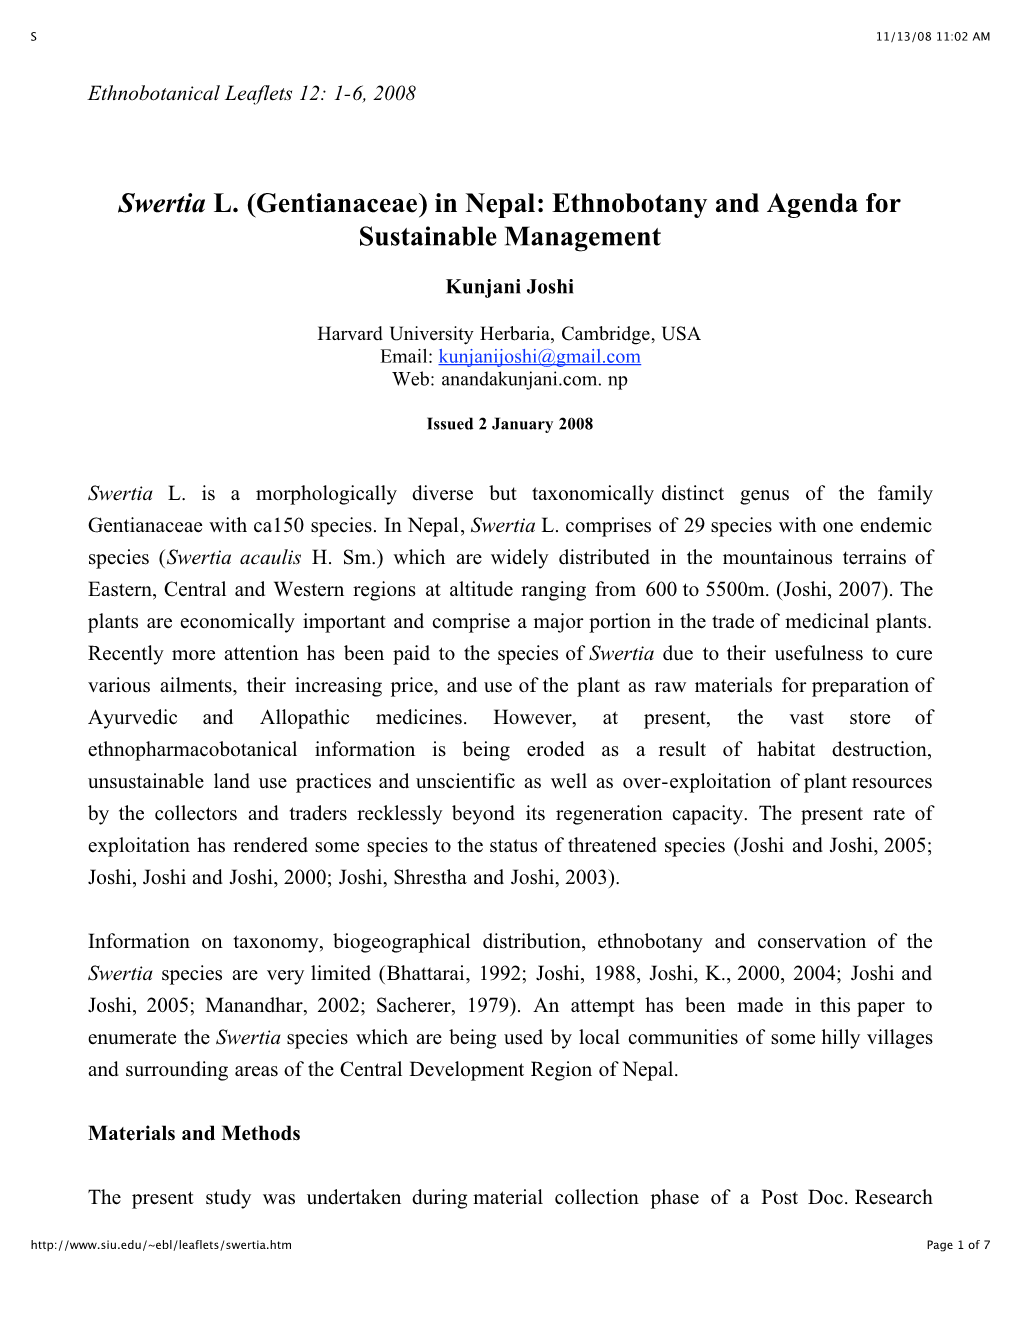 Swertia L. (Gentianaceae) in Nepal: Ethnobotany and Agenda for Sustainable Management